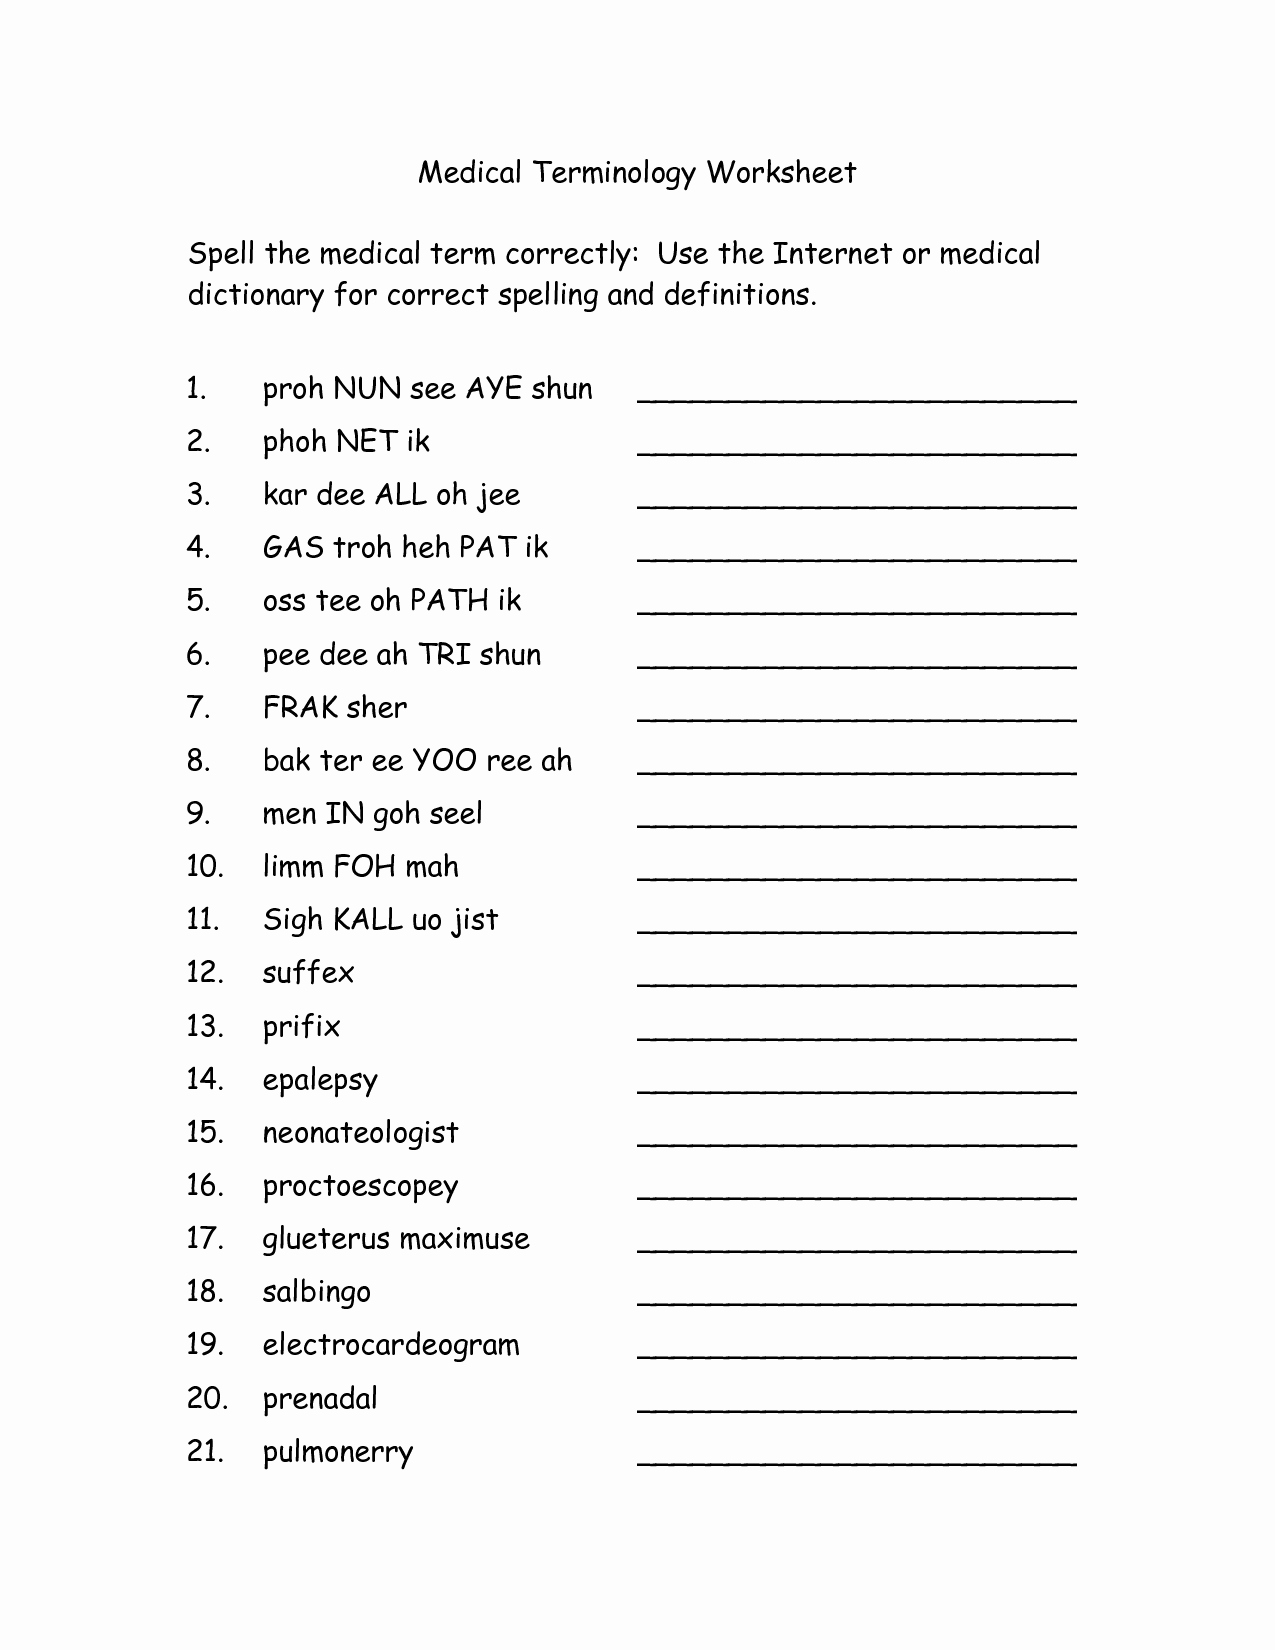 Medical Terminology Suffixes Worksheet